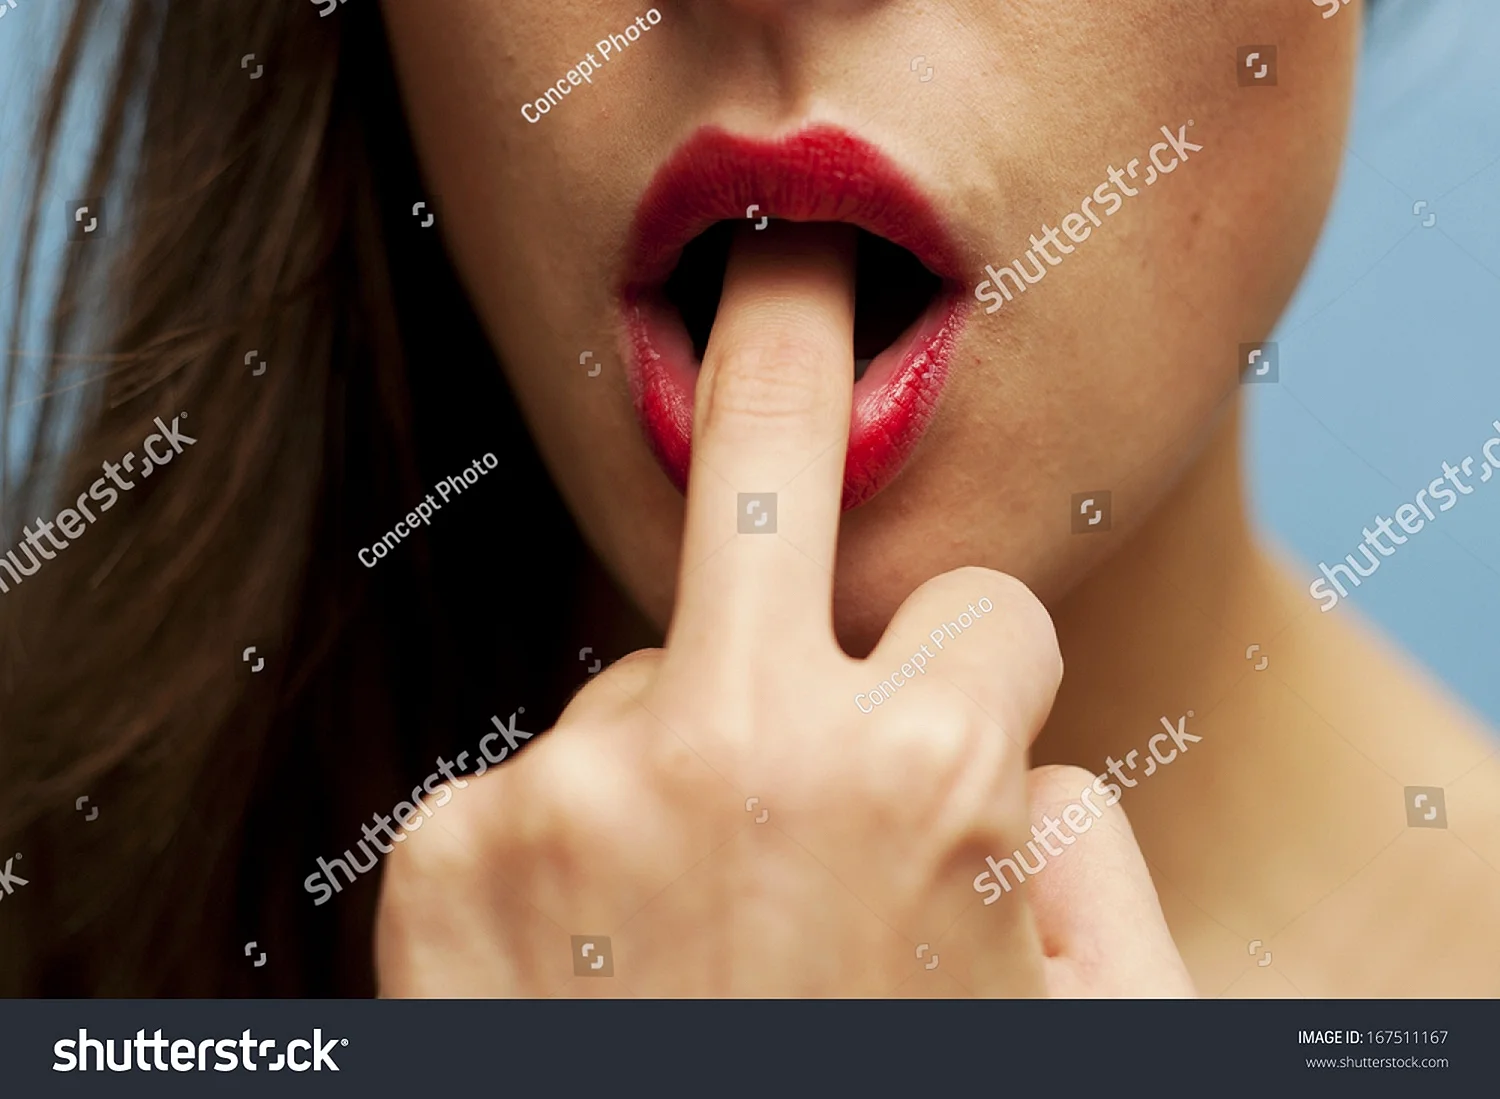 Палец во рту у девушки